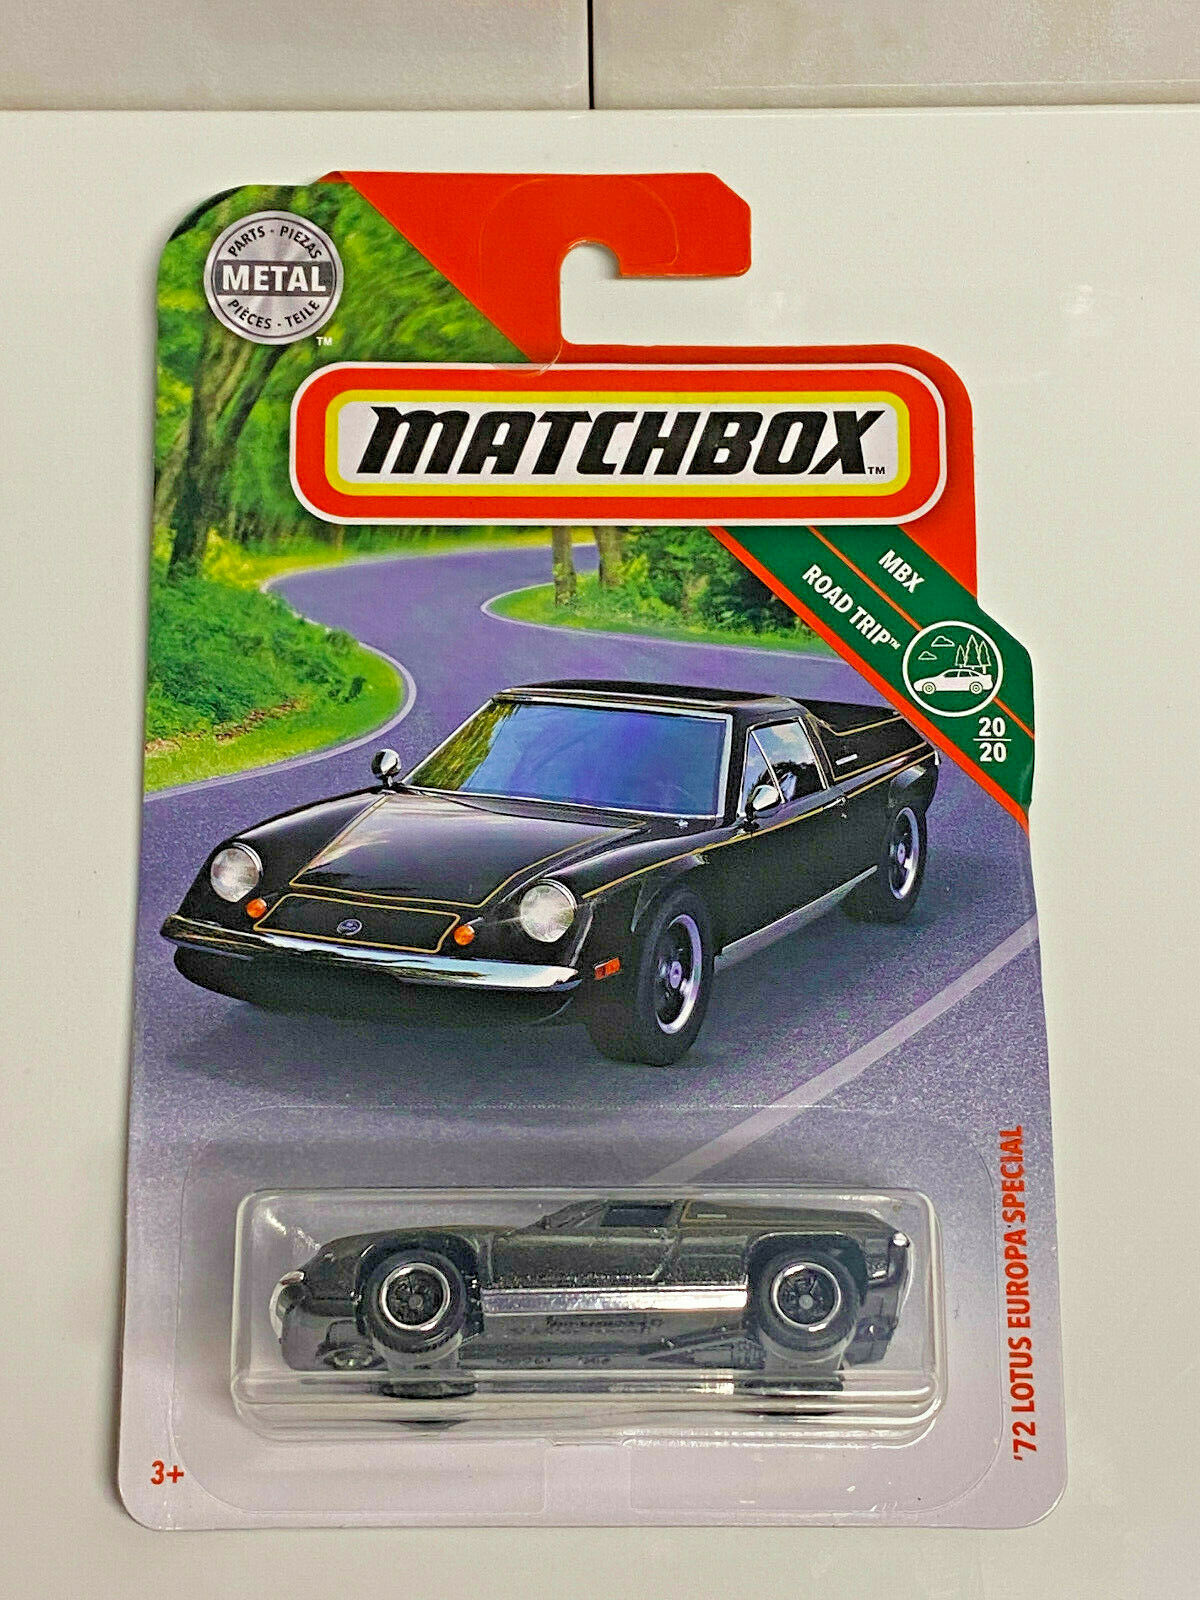 2019 Matchbox MBX Road-Trip #20/20 '72 Lotus Europa Special #15/100 NIP